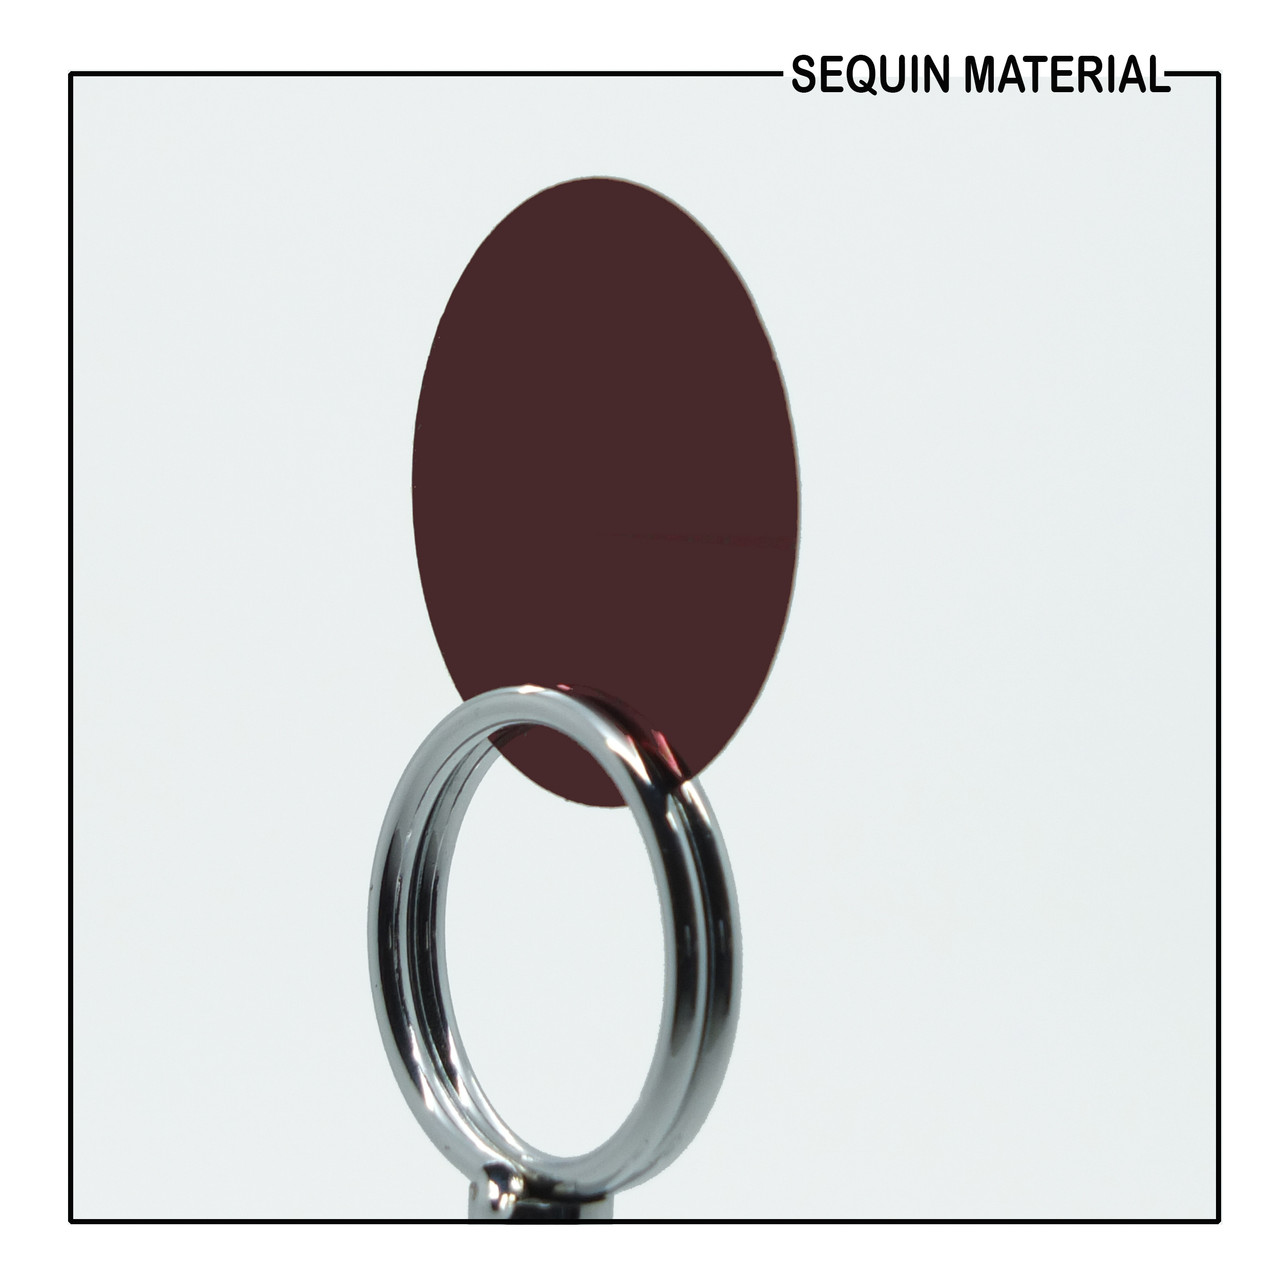 SequinsUSA Chocolate Brown Shiny Metallic Sequin Material Film RL357